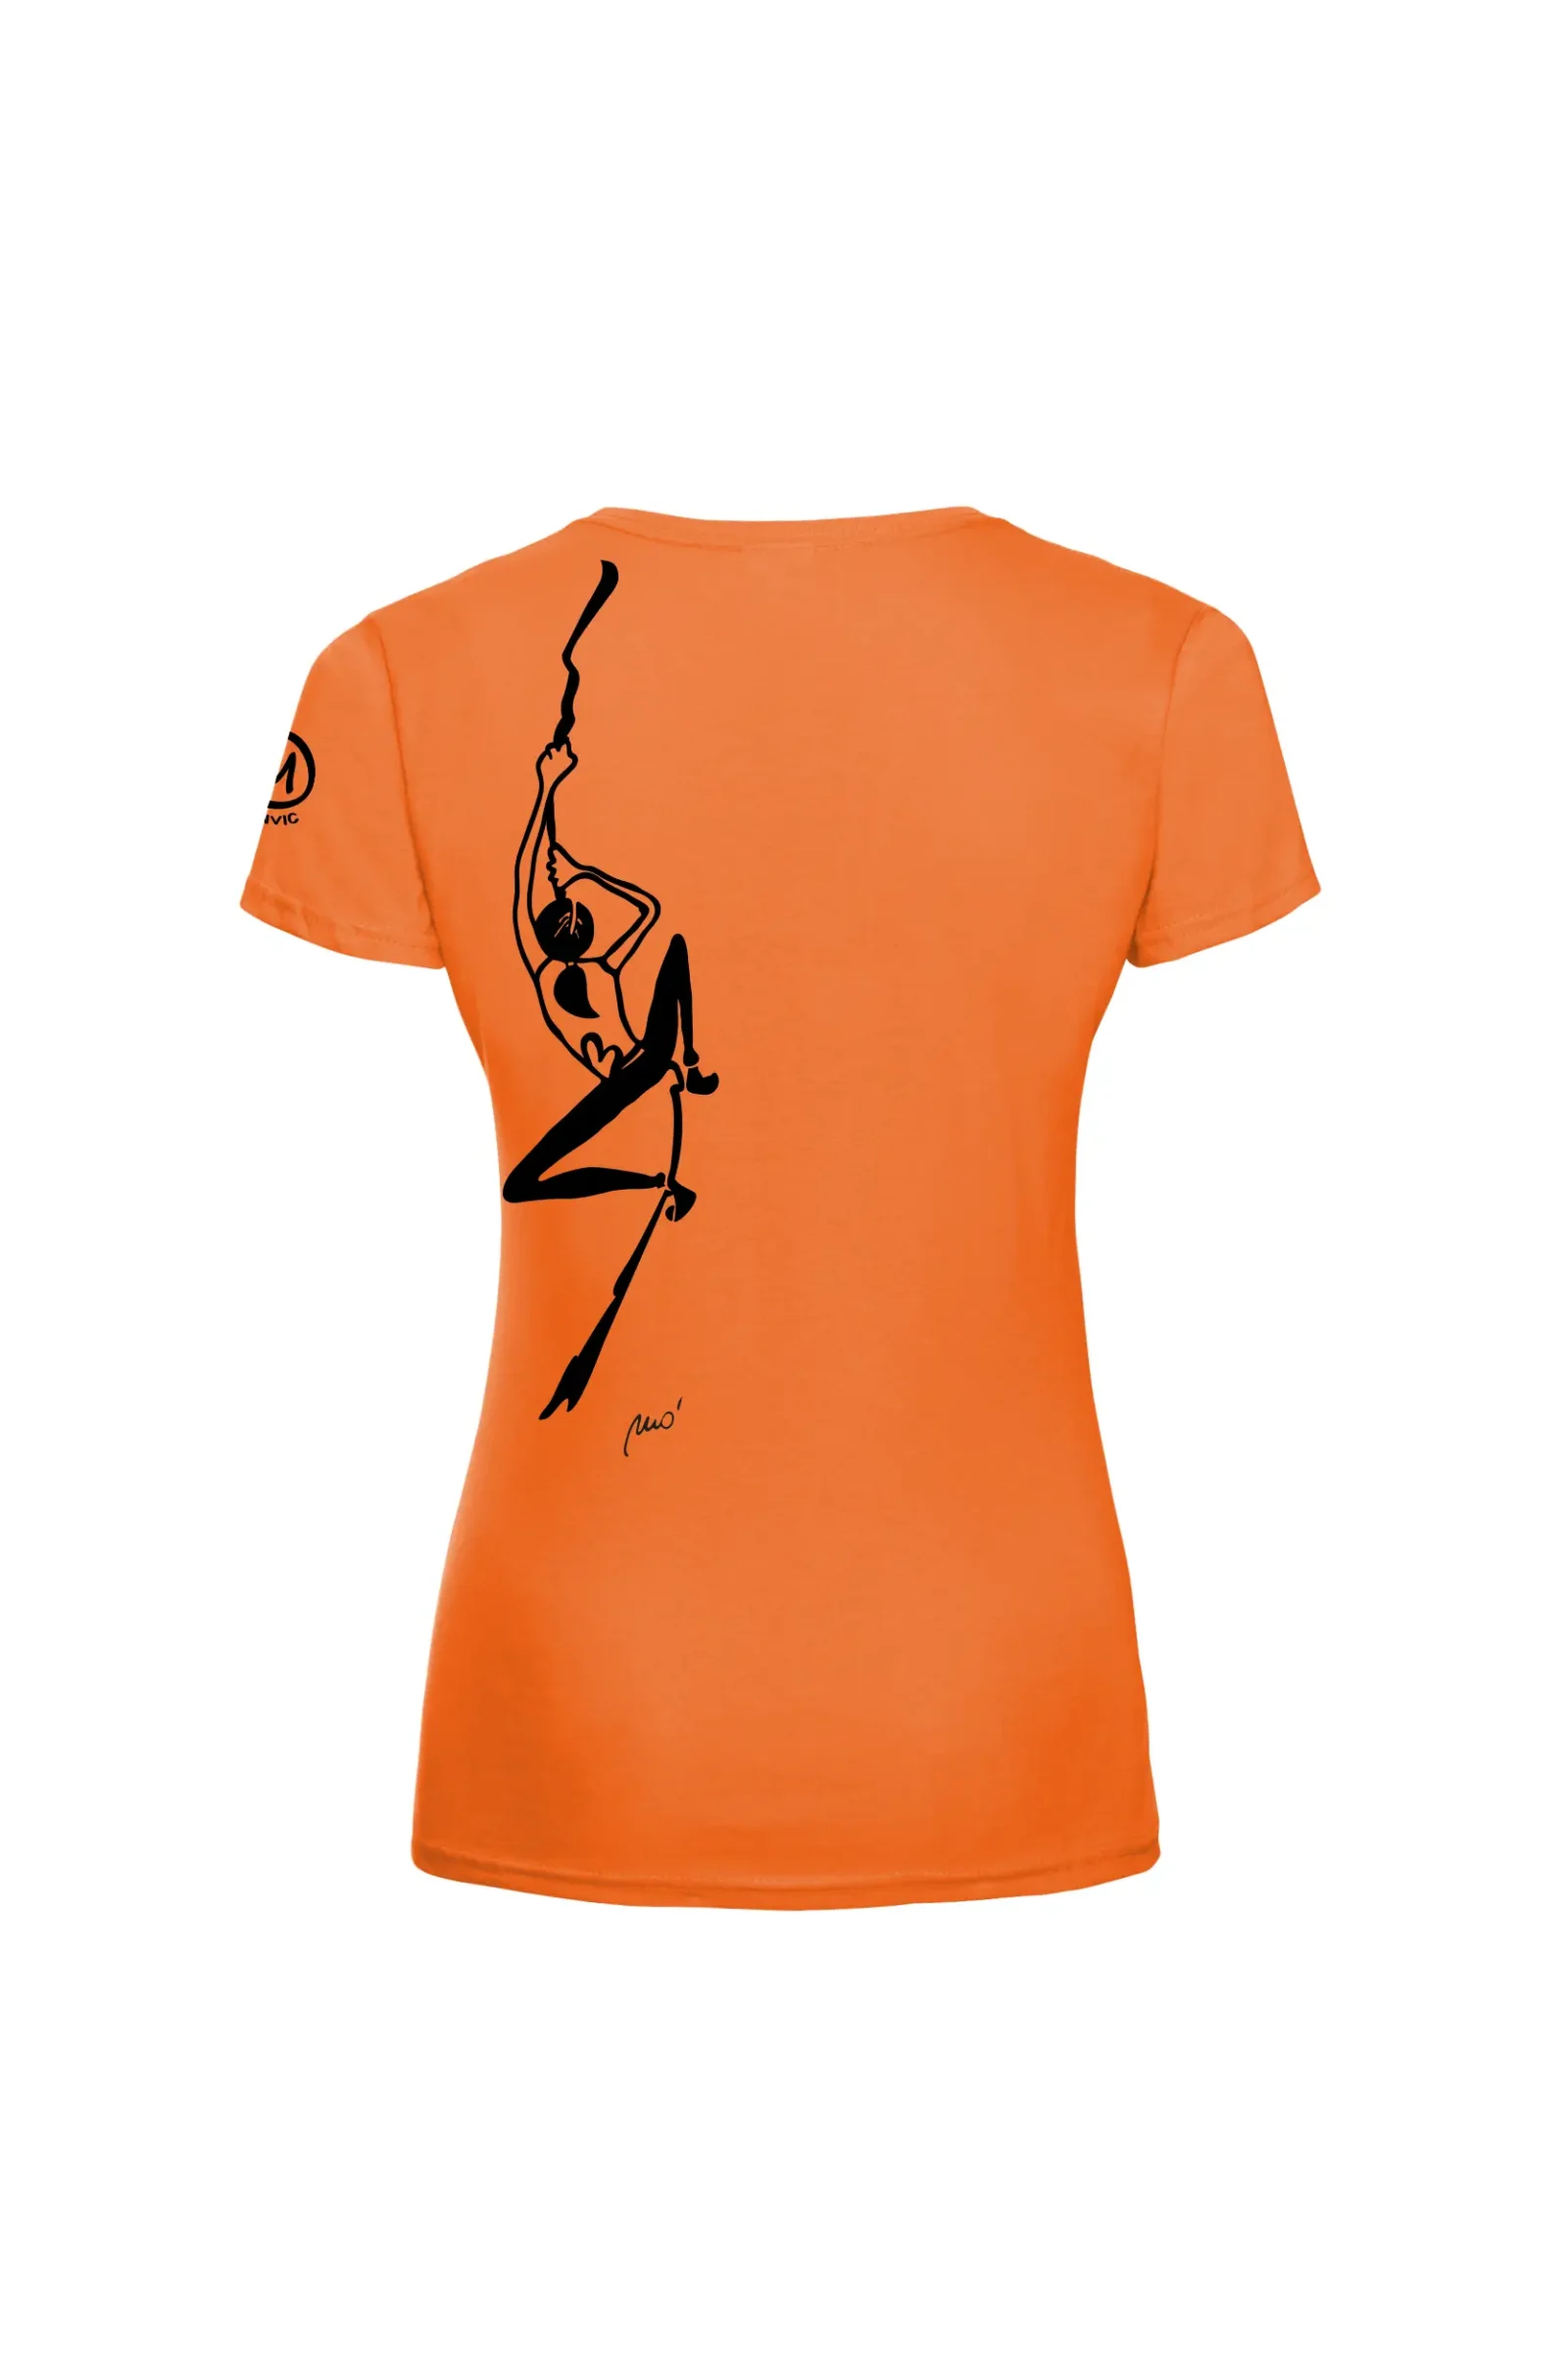 Women's climbing t-shirt - orange cotton - "Sabry" SHARON by MONVIC